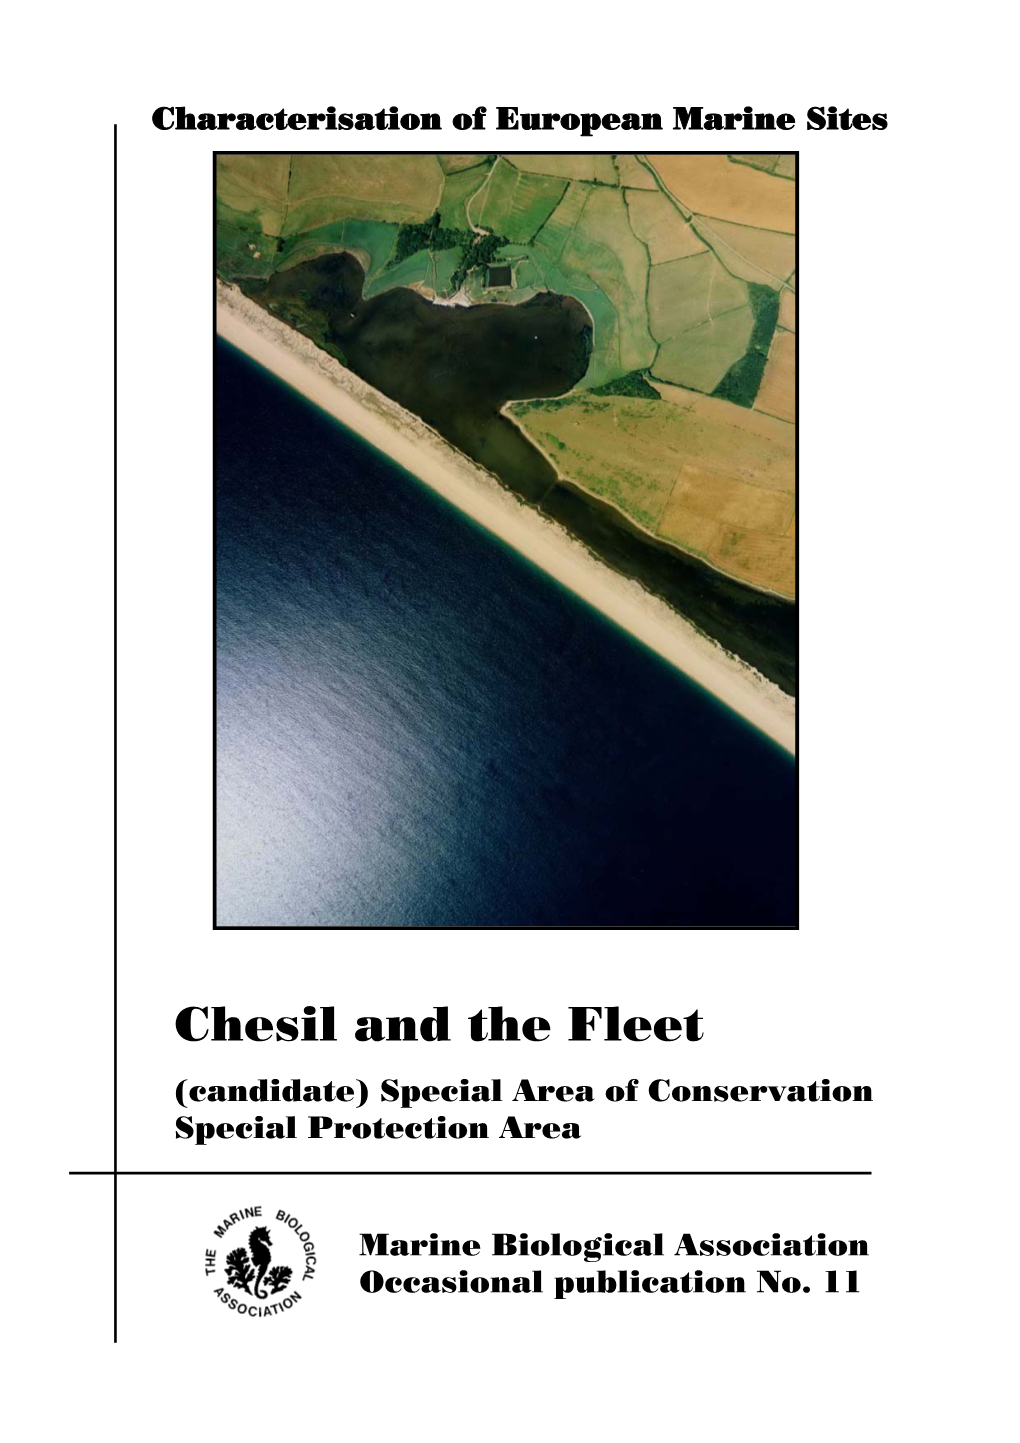 Chesil and the Fleet Csac, SPA